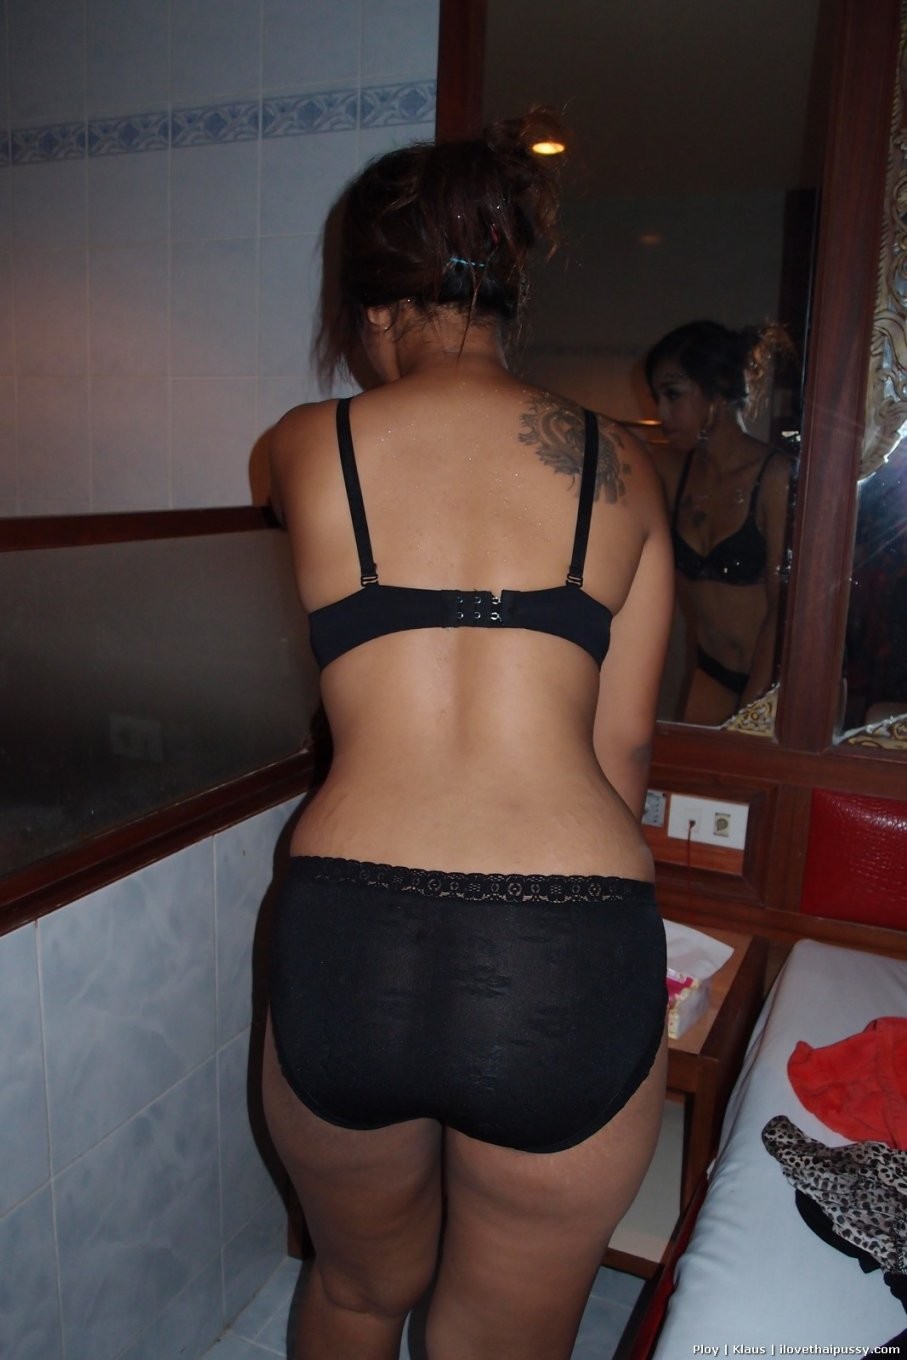 Grande bottino bangkok prostituta penetrata senza preservativo bareback per soldi puttana asiatica
 #68460942